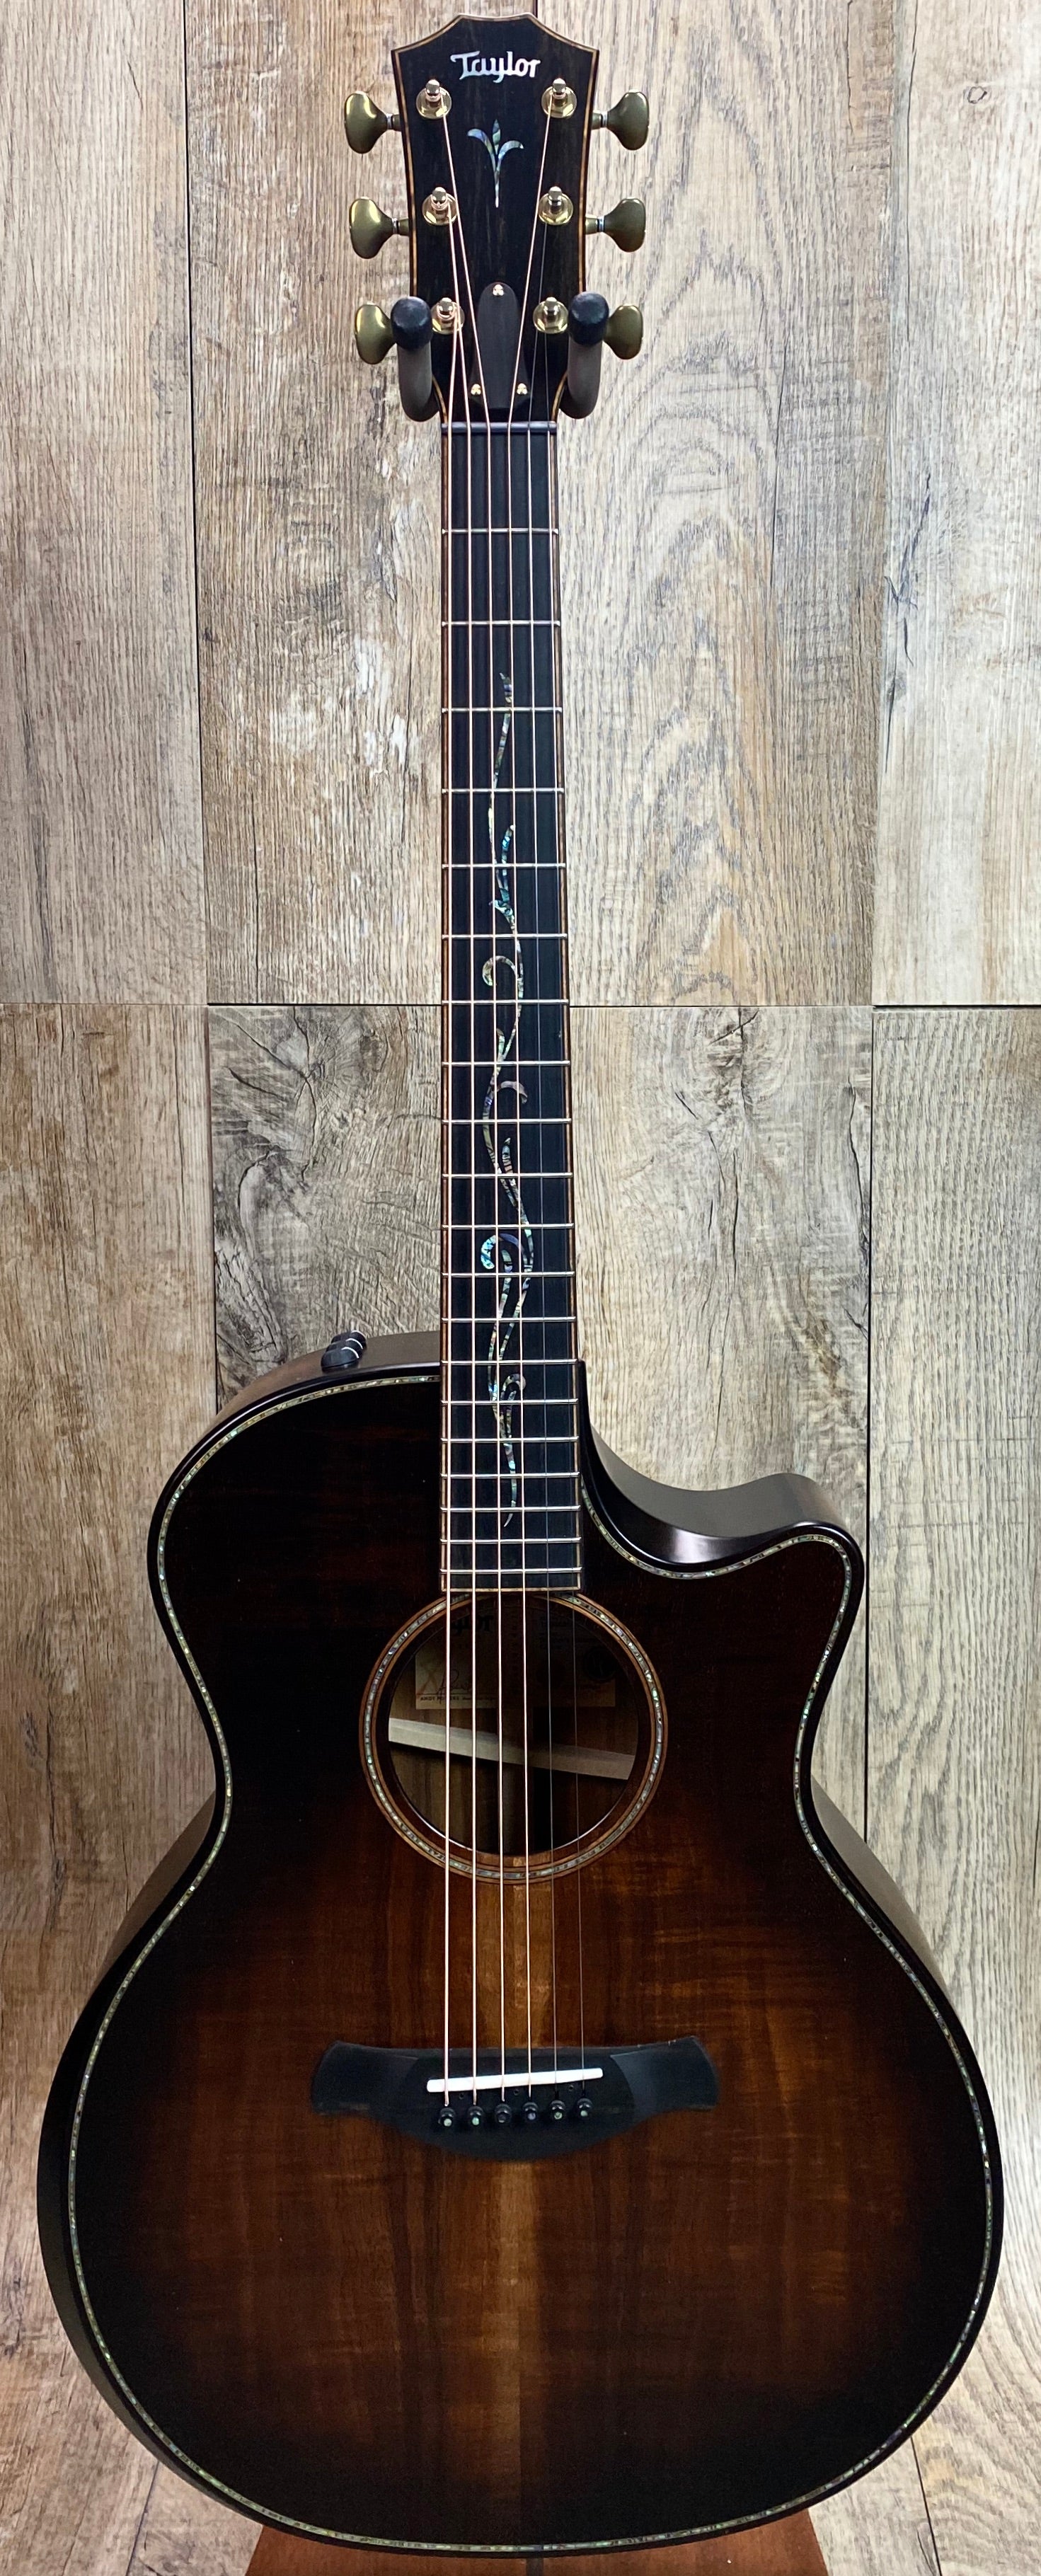 Taylor Builder's Edition K24ce Acoustic Guitar in Hawaiian koa Tone Shop Guitars Dallas